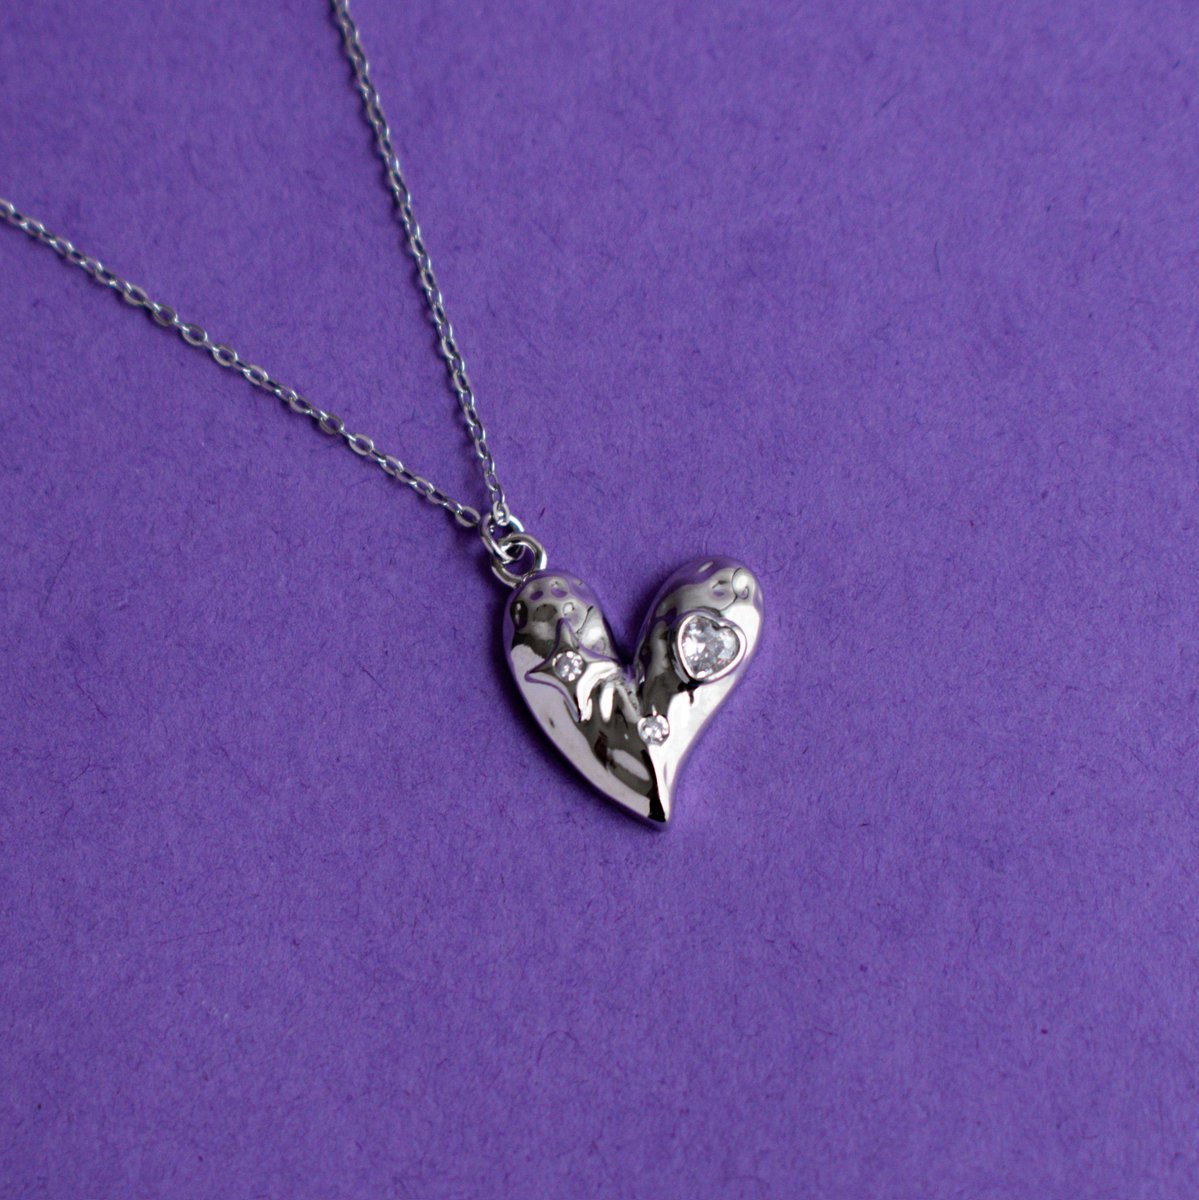 Silver Heart Charm Necklace 💖✨

#lovenecklace #lovejewelry #etsyshop #etsystore  #etsyhandmade  #etsyfinds  #etsysale  #heartnecklace #heartjewelry 

Shop Now ↙️
gosyjewelry.etsy.com